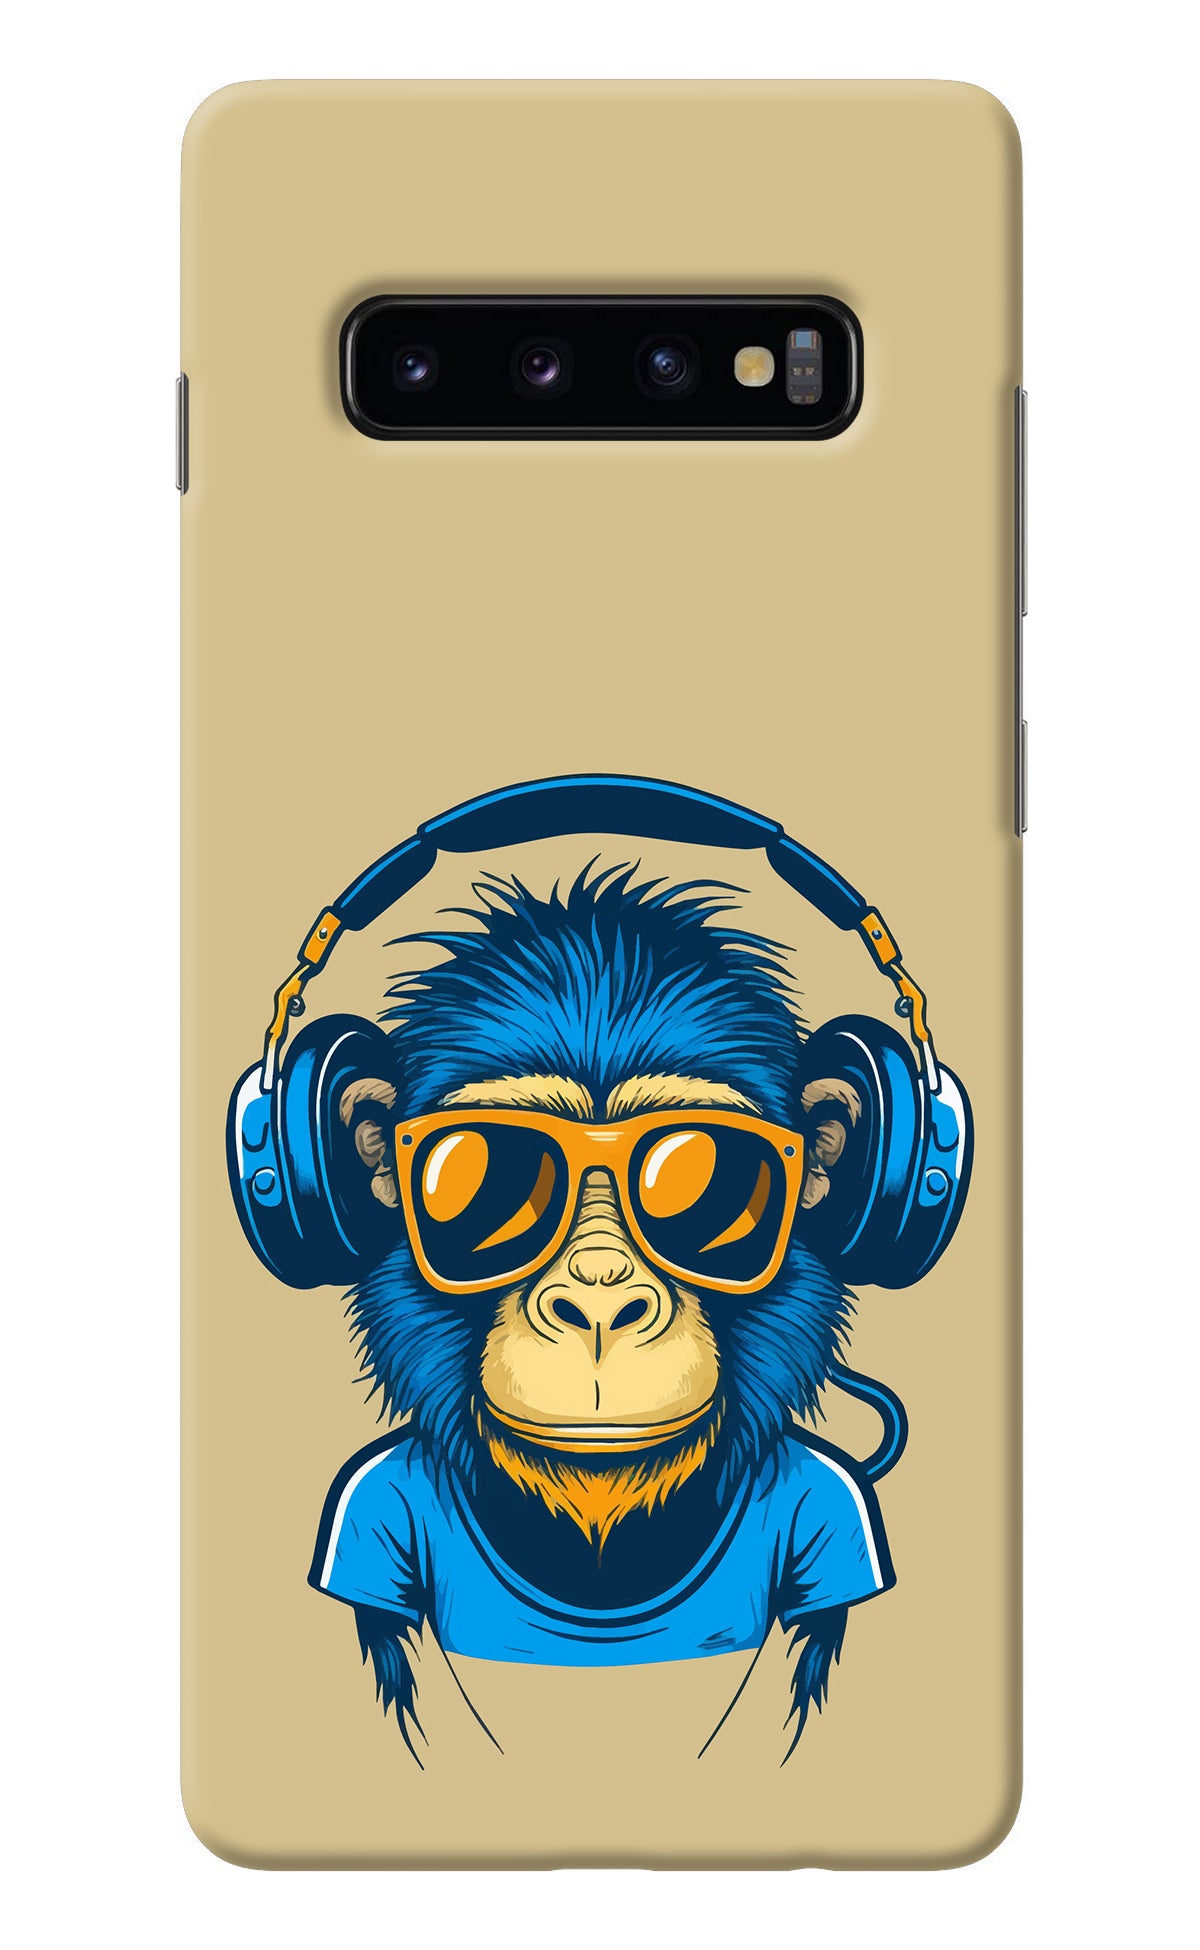 Monkey Headphone Samsung S10 Plus Back Cover